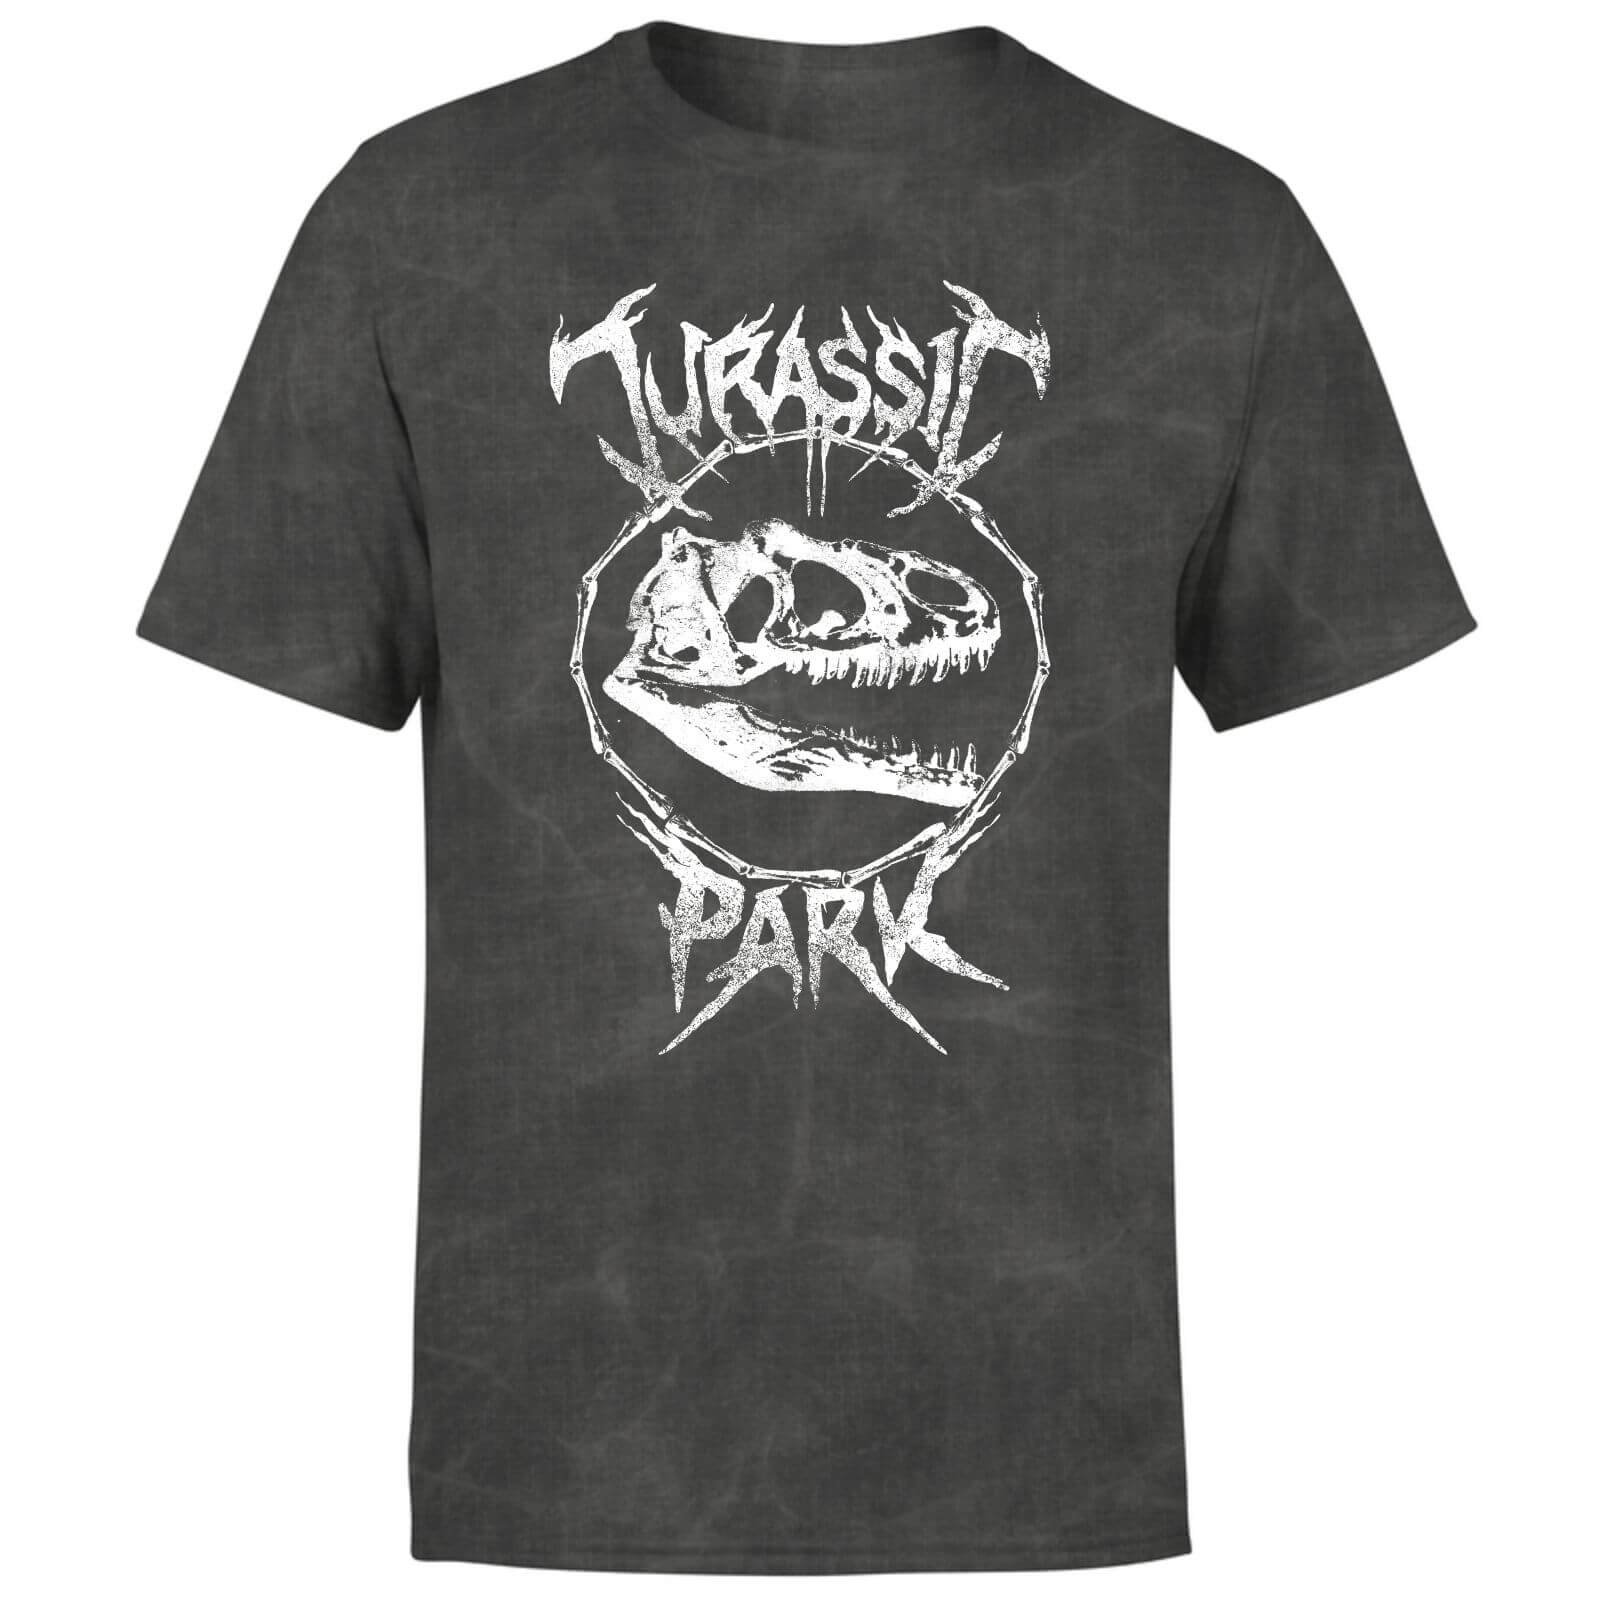 Jurassic Park T-Rex Bones Unisex T-Shirt - Black Acid Wash - S